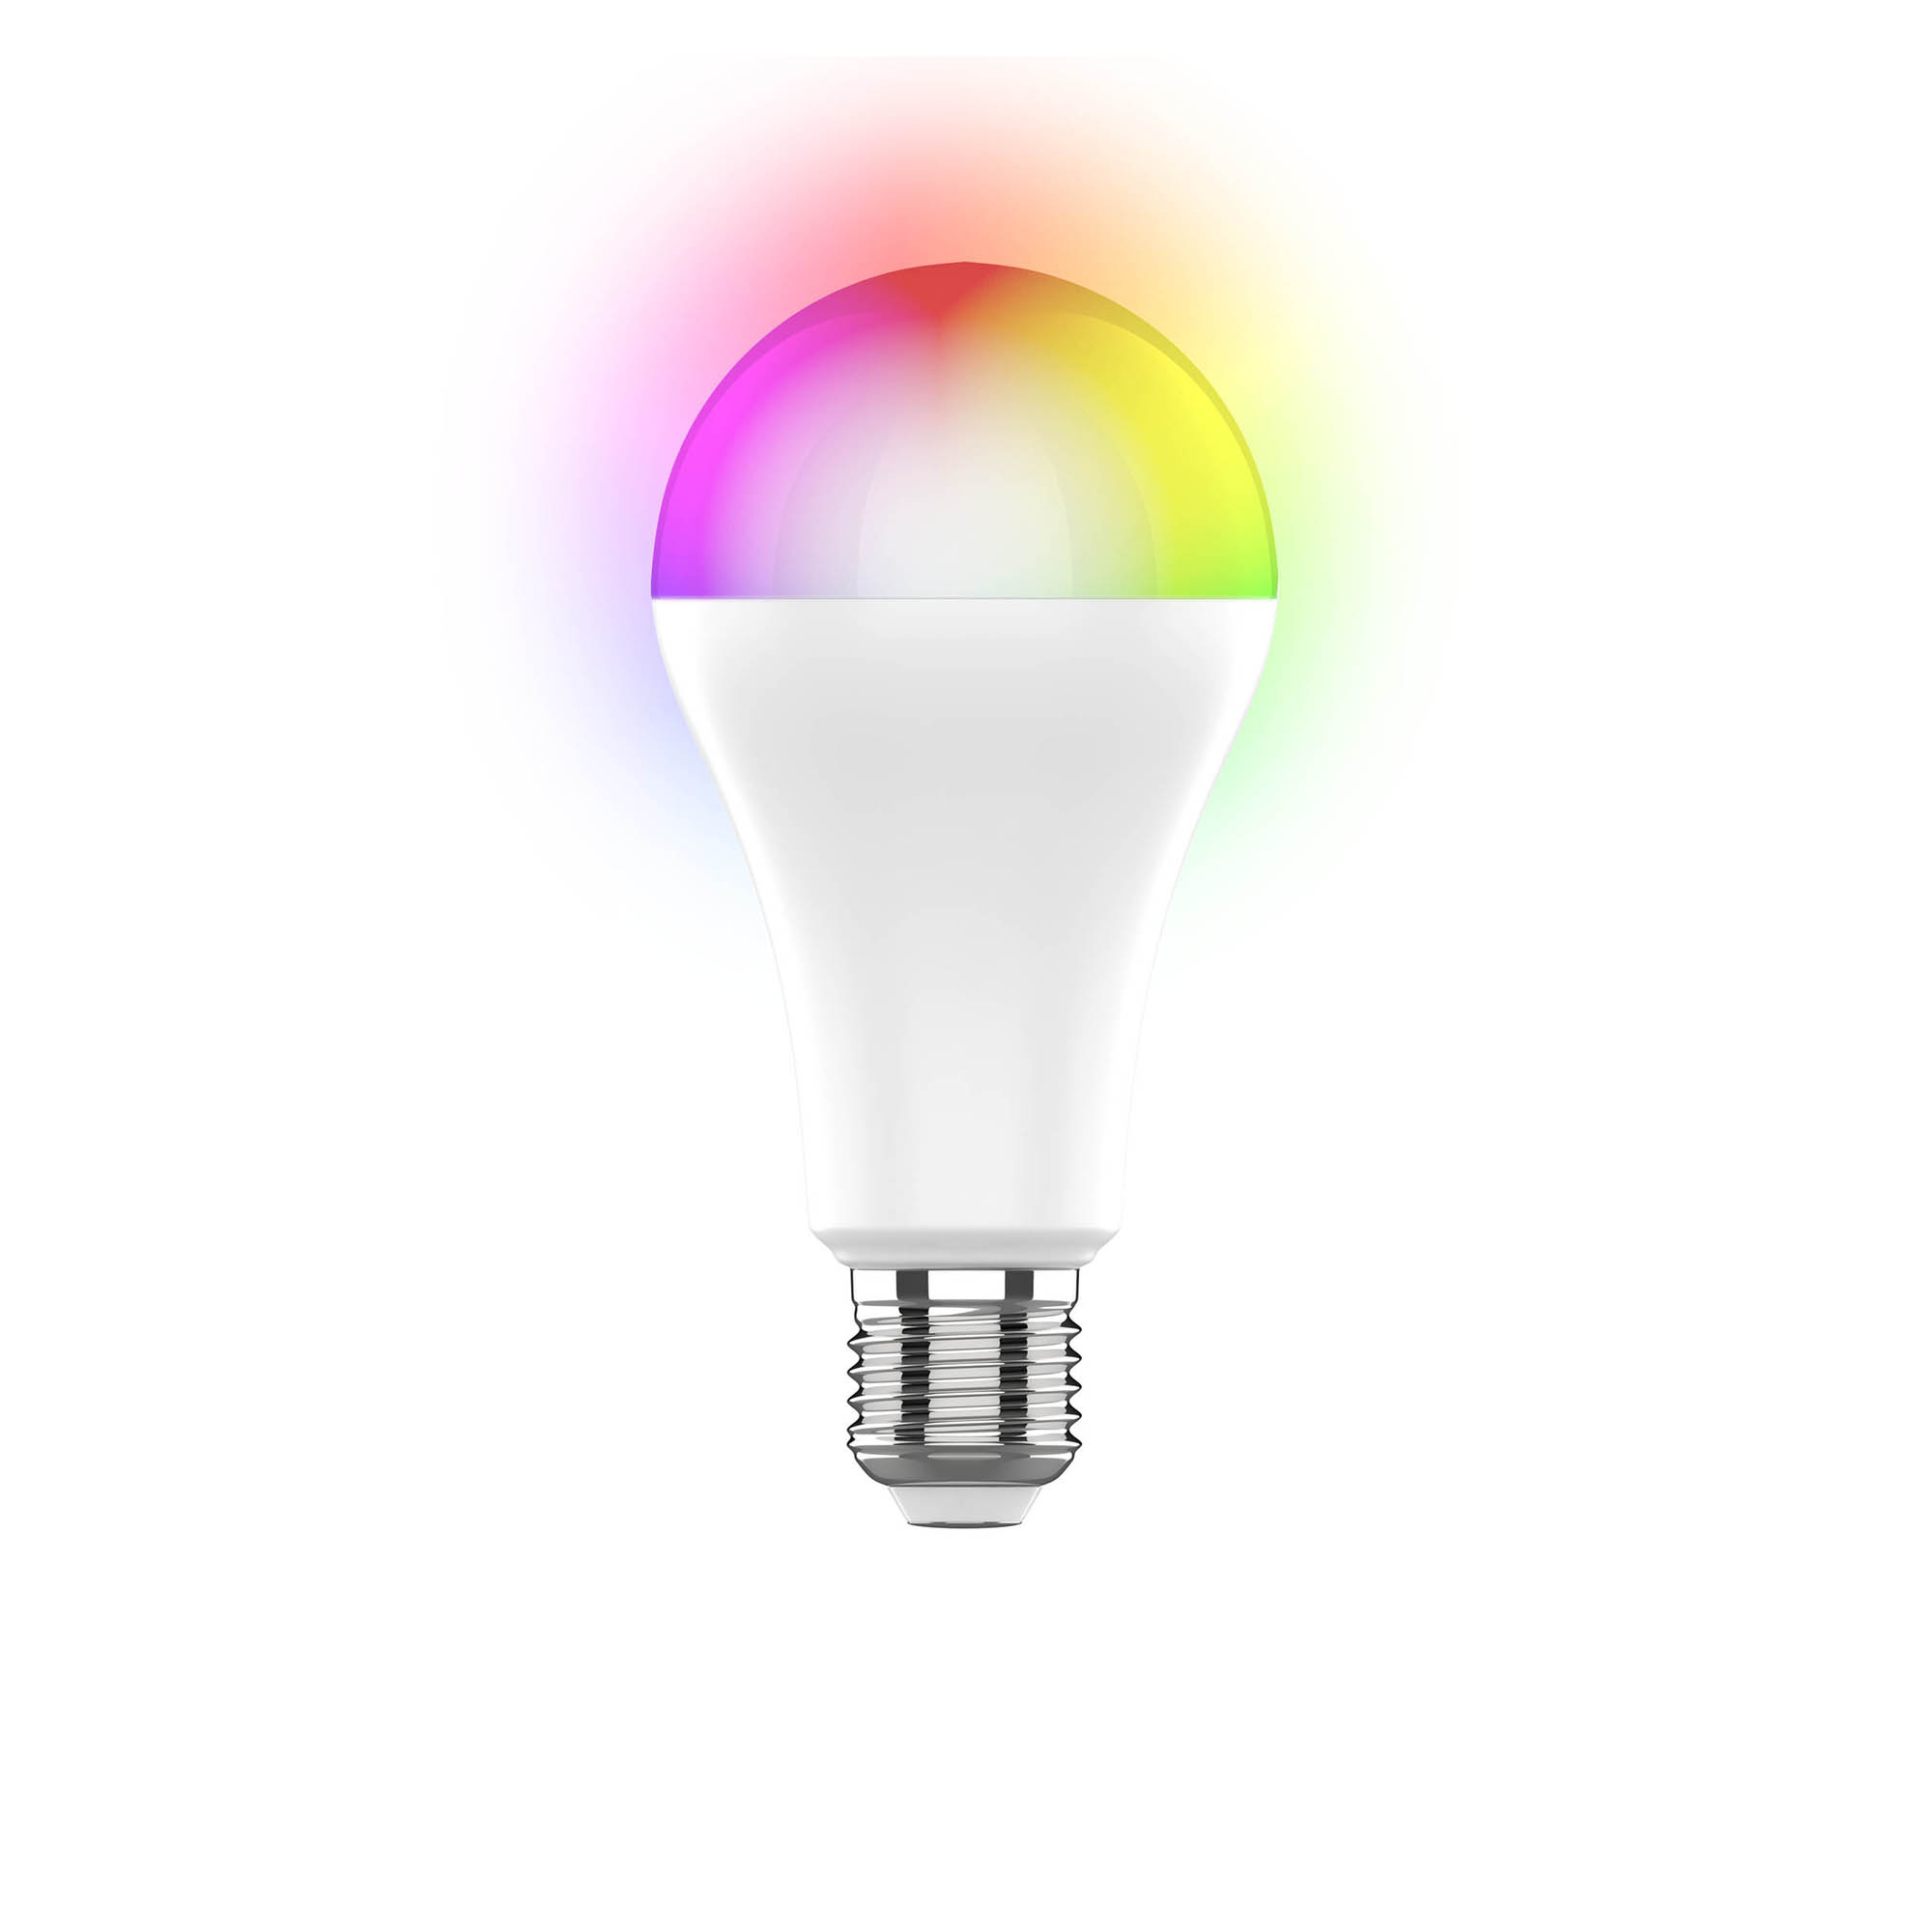 Умная лампочка HIPER IoT A65 RGB